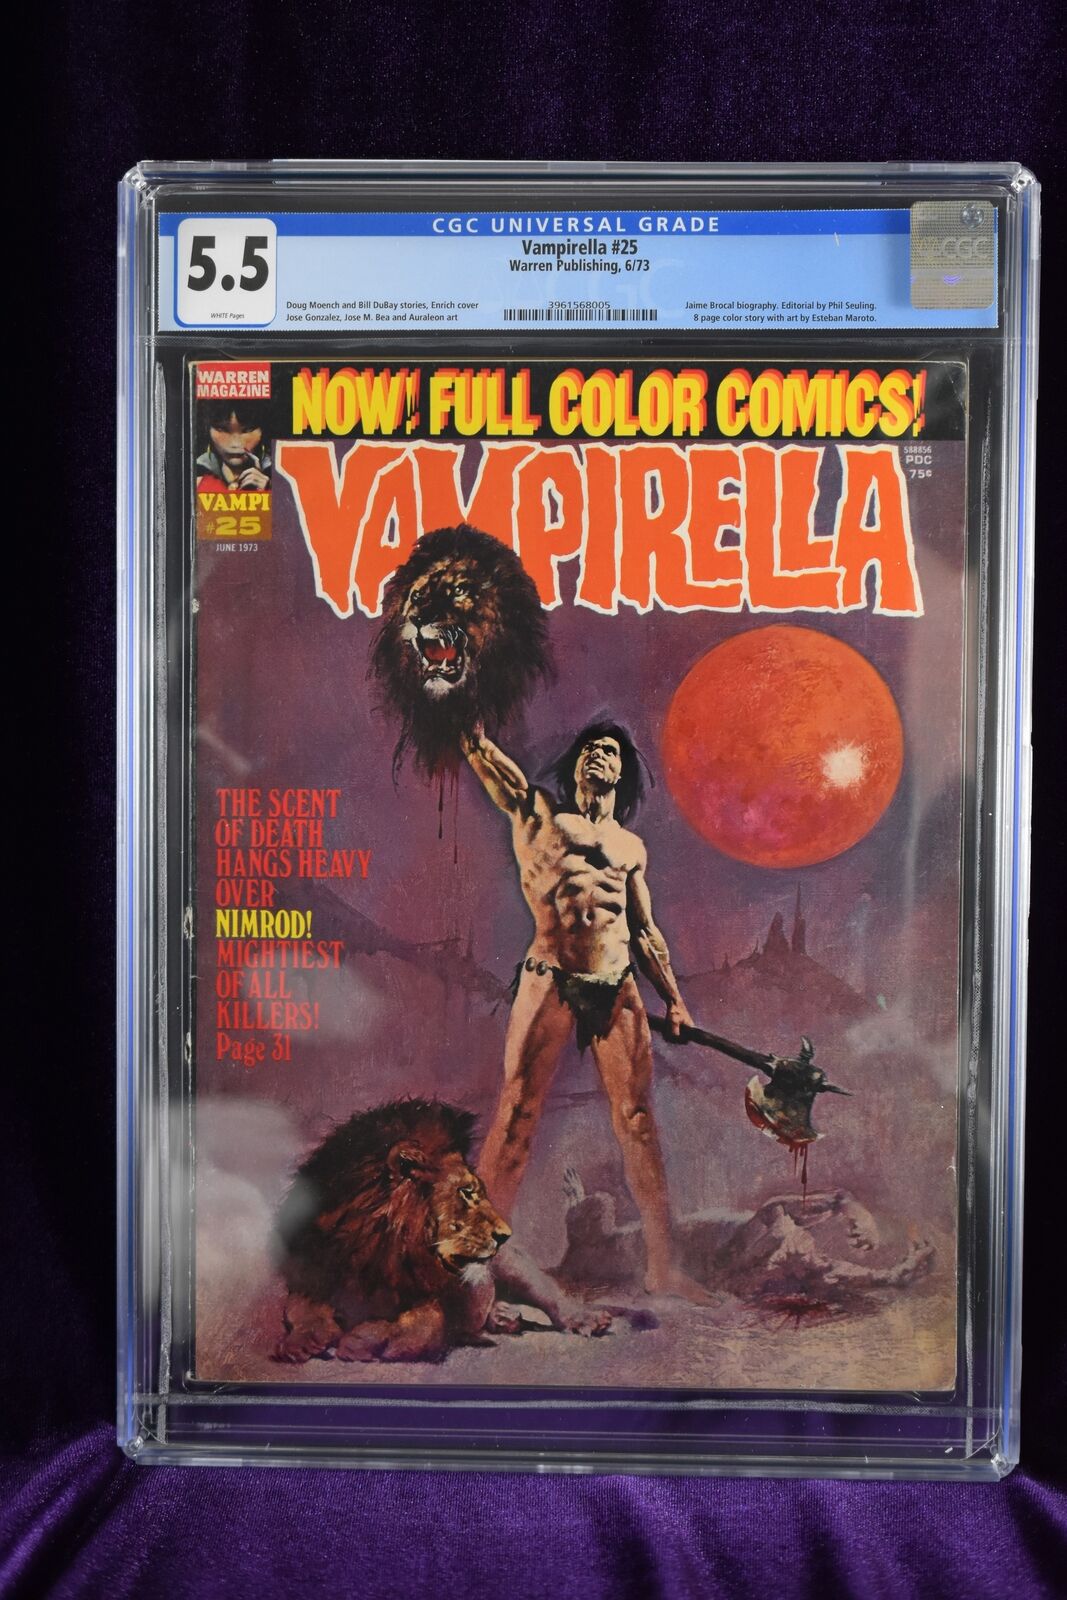 Vampirella CGC 5.5 #25 Warren Publishing 6/73 White Pages